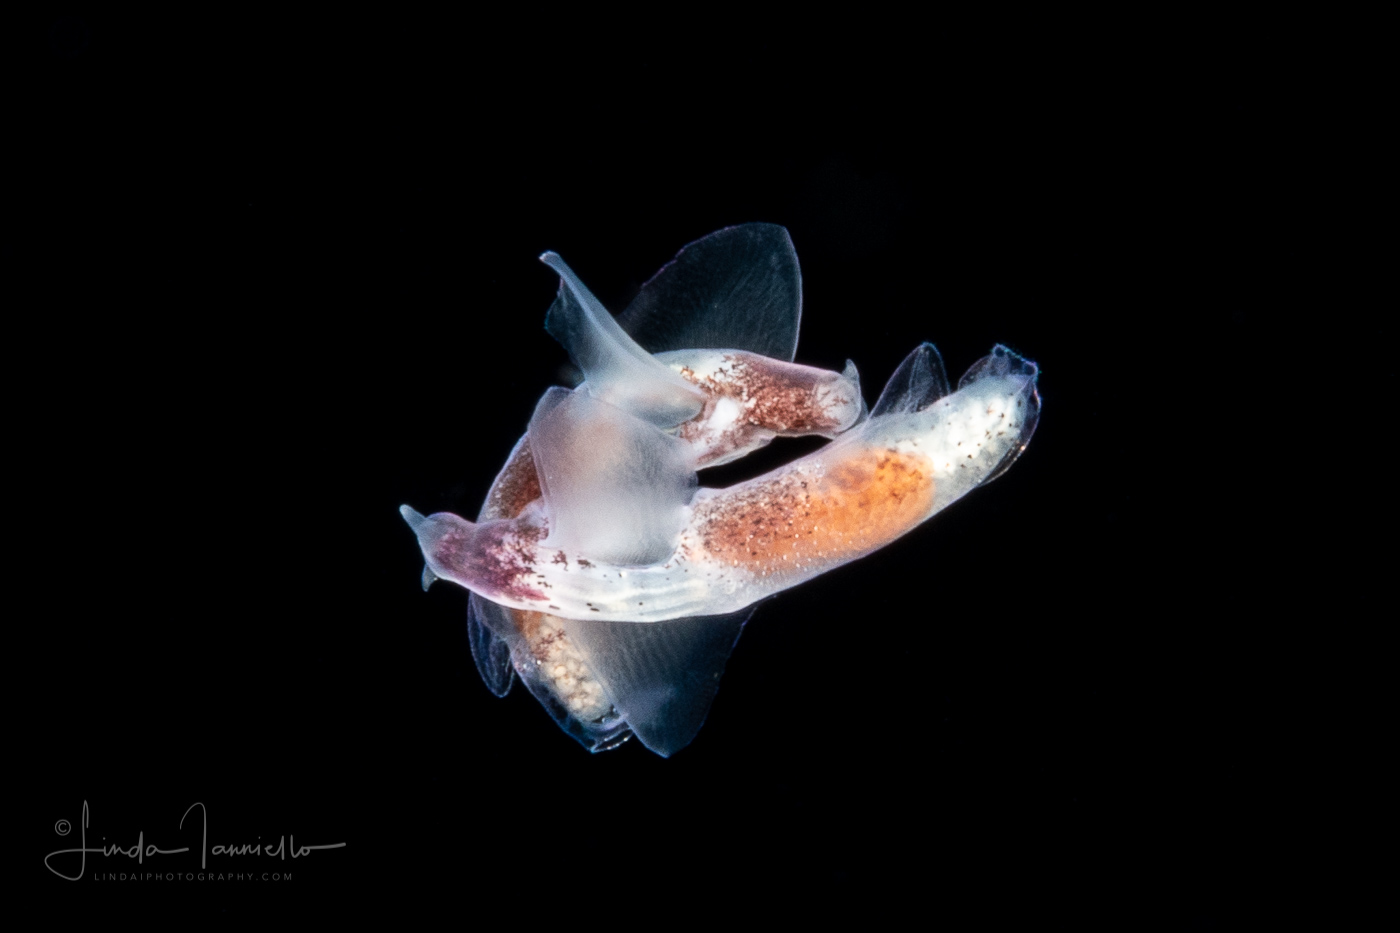 Sea Angel - Pteropoda - Gymnosomata - Pneumoderma violaceum -  Mating